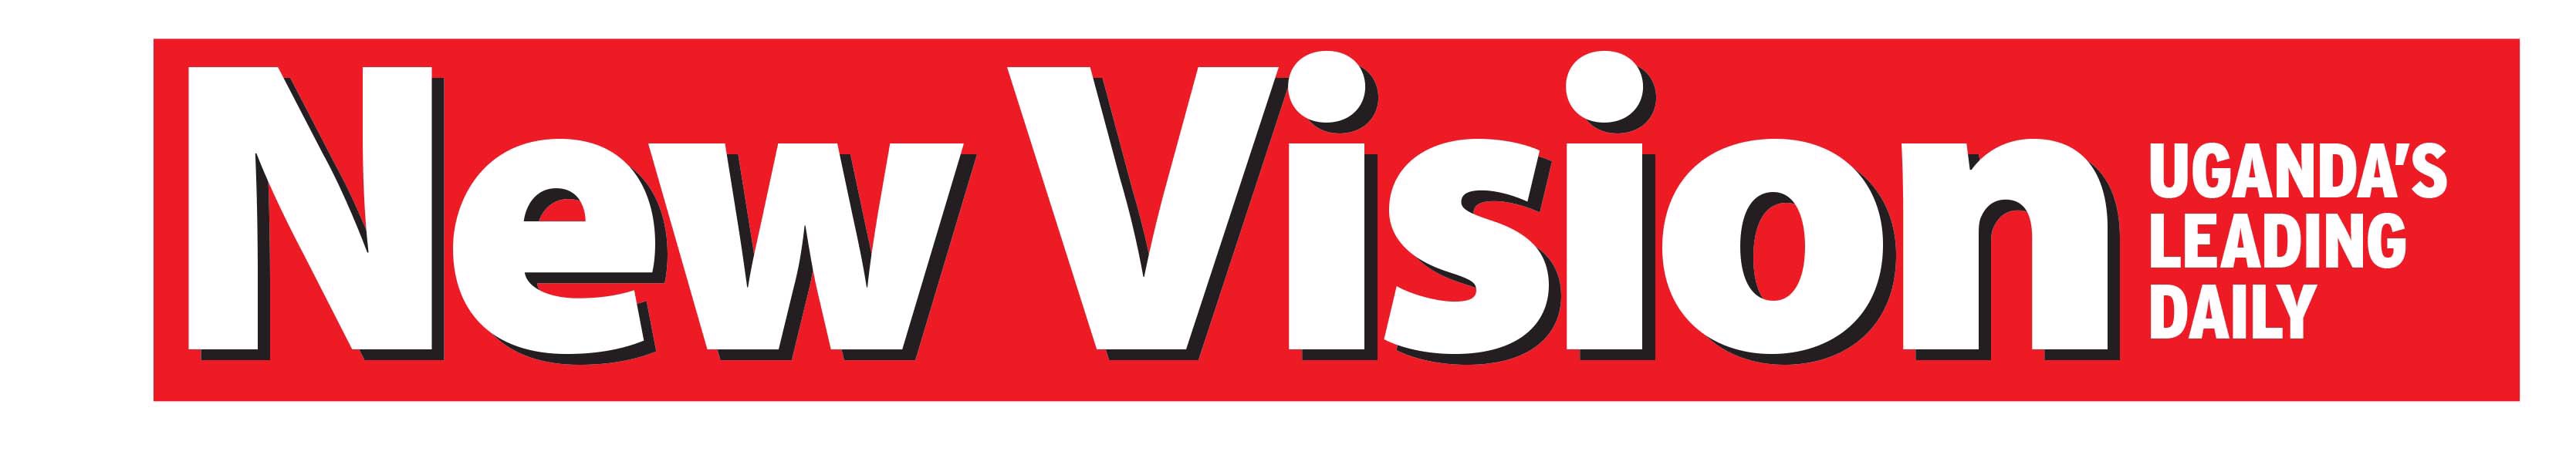 New Vision - Uganda's Leading Daily Logo